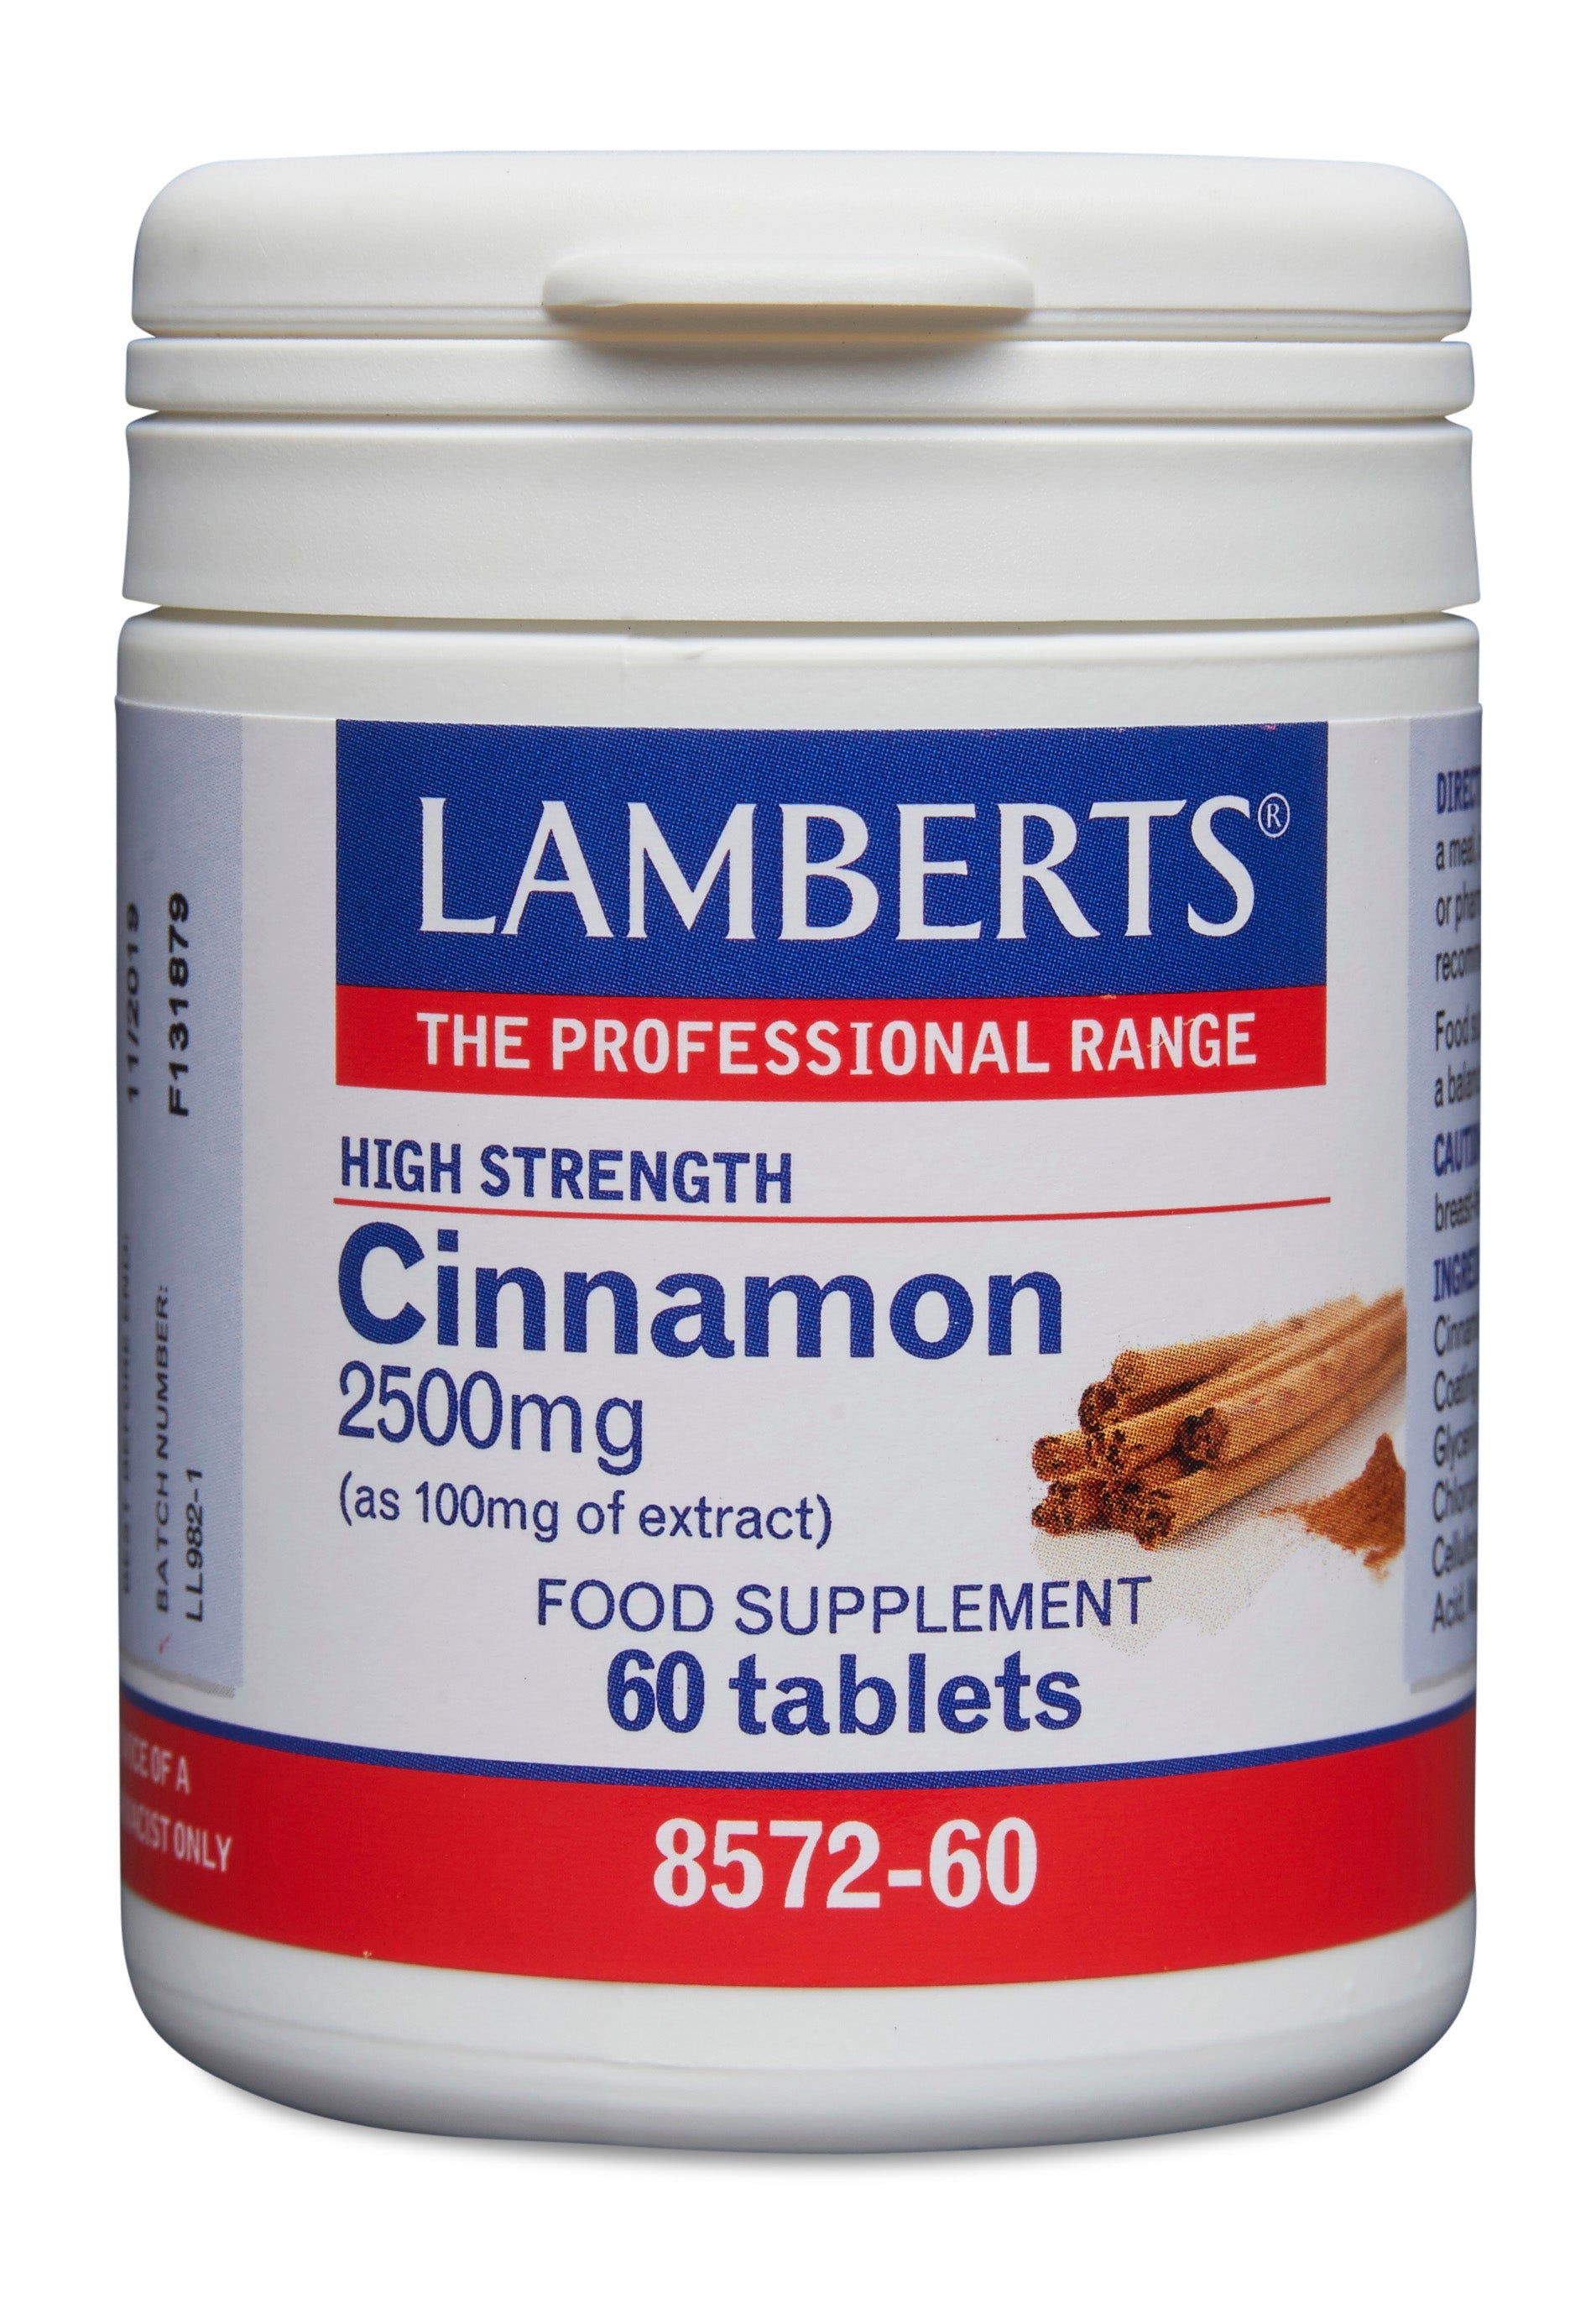 lamberts - 60 tablets Cinnamon 2500mg